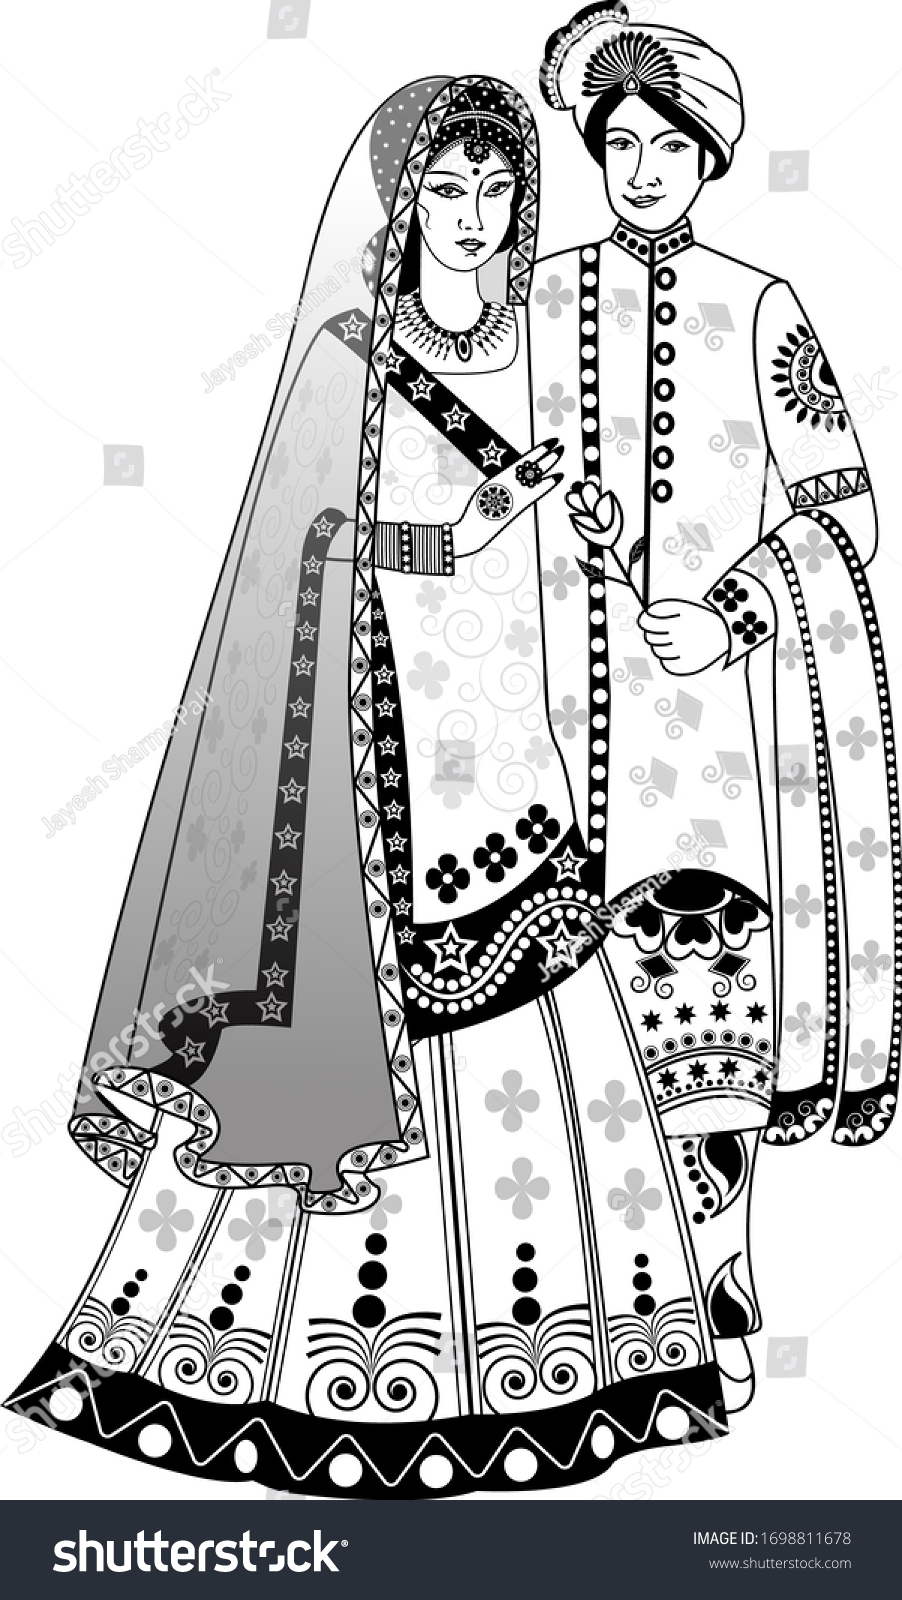 indian bride and groom drawing images - blueandorangeartwork